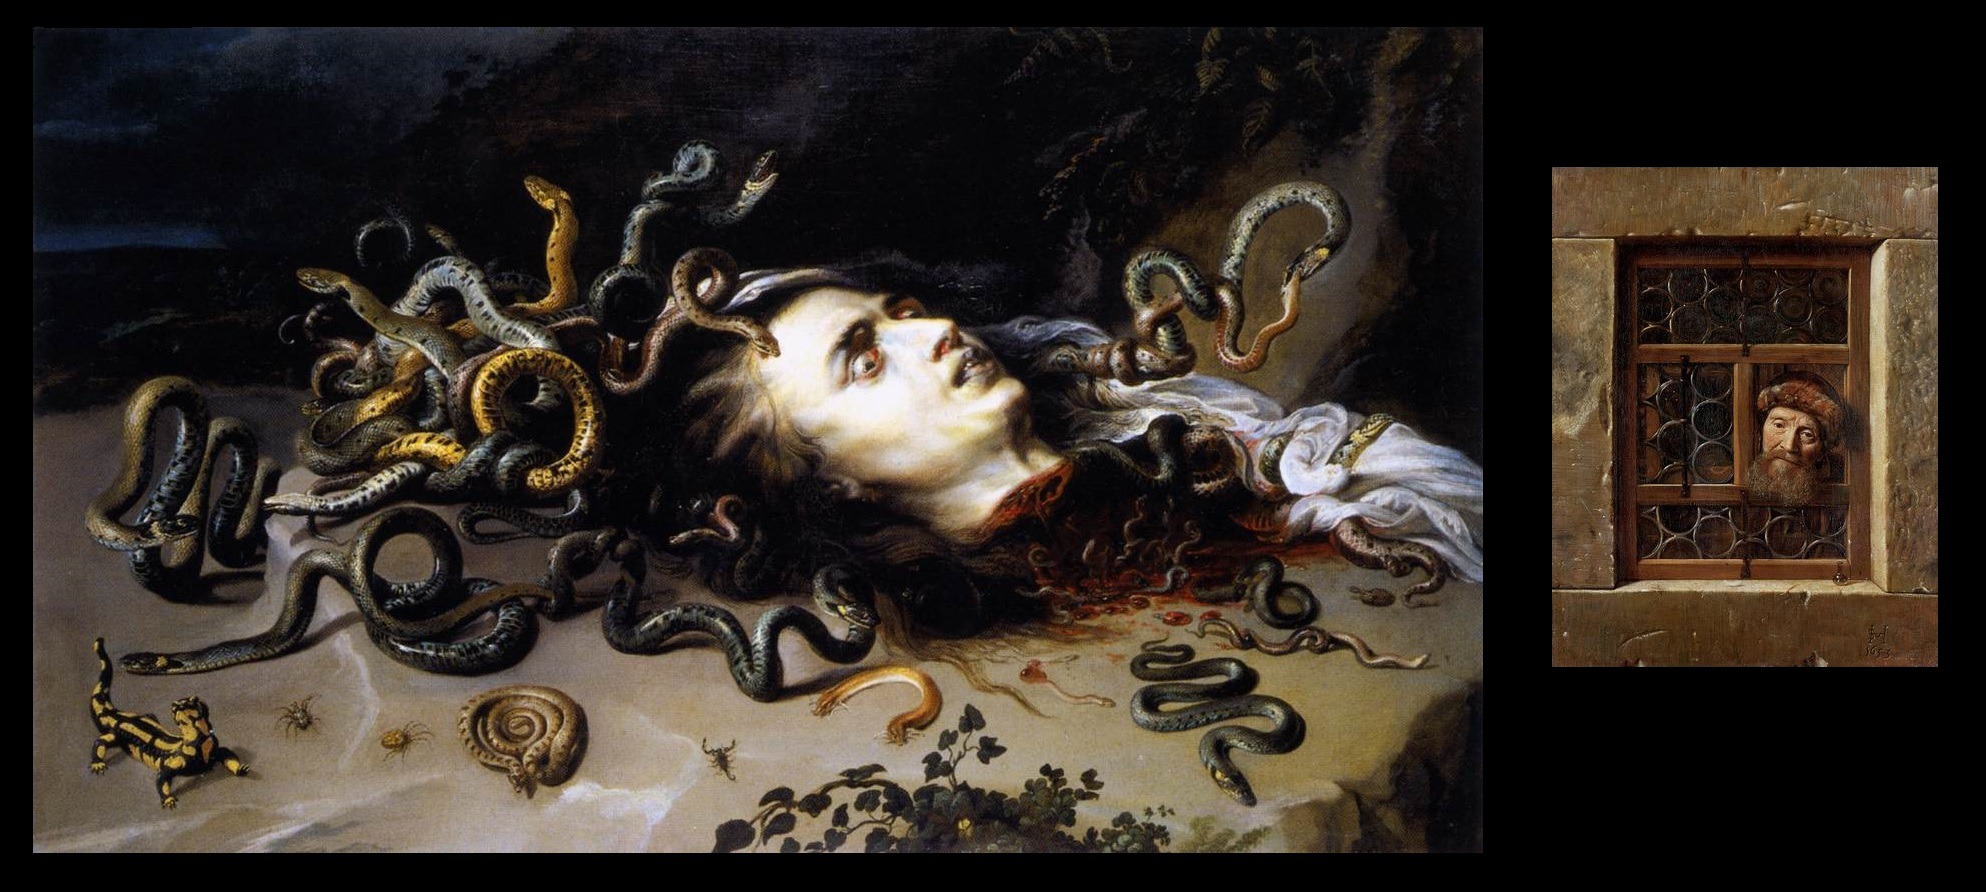 Peter Paul Rubens - The Head of Medusa and Samuel van Hoogstraten - Old man in window